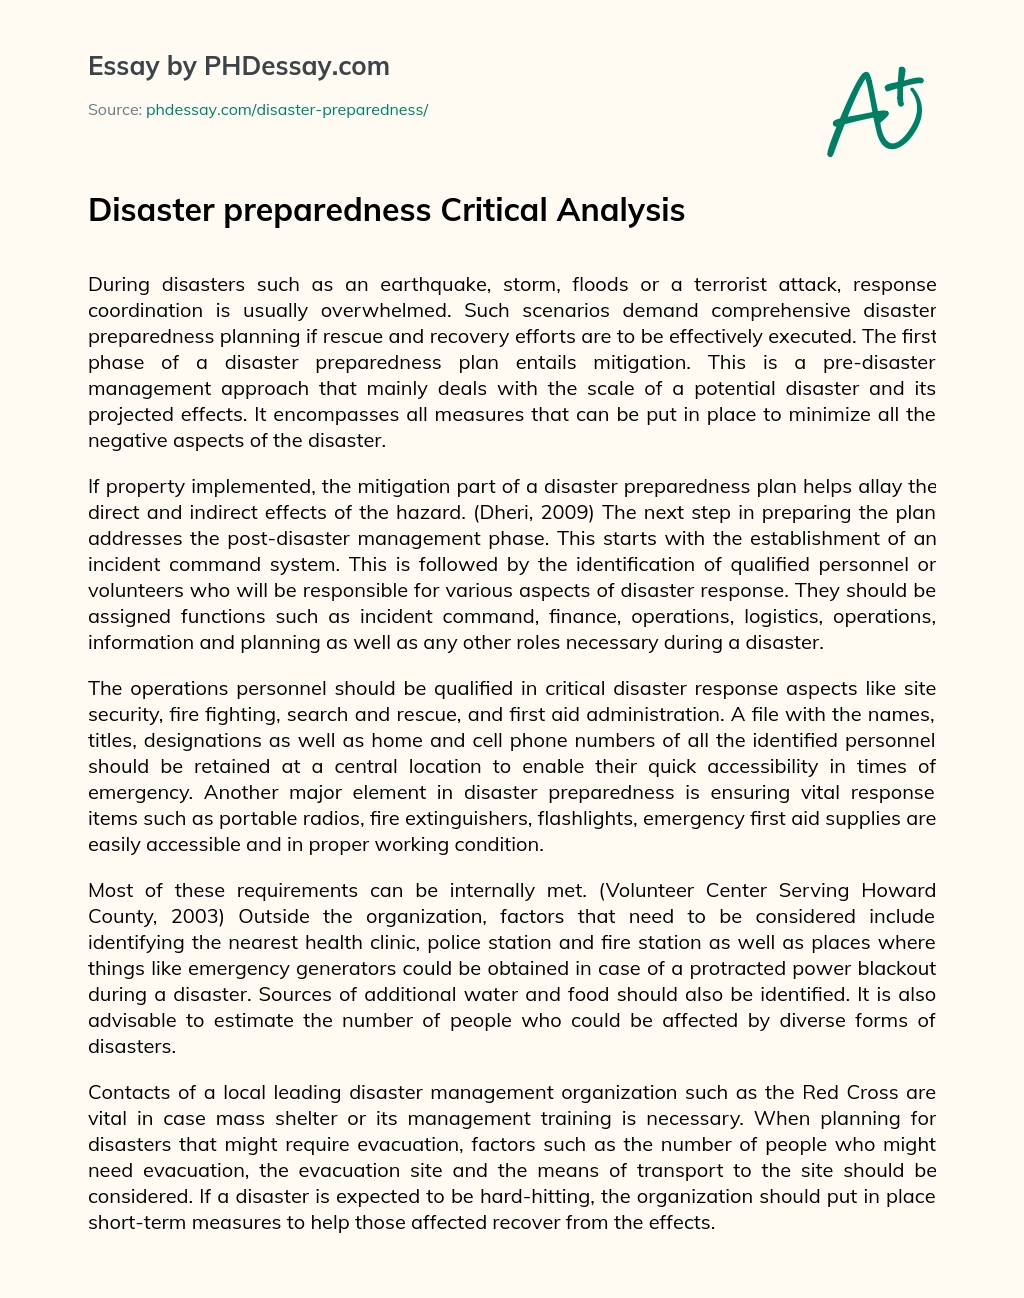 Disaster preparedness Critical Analysis - PHDessay.com